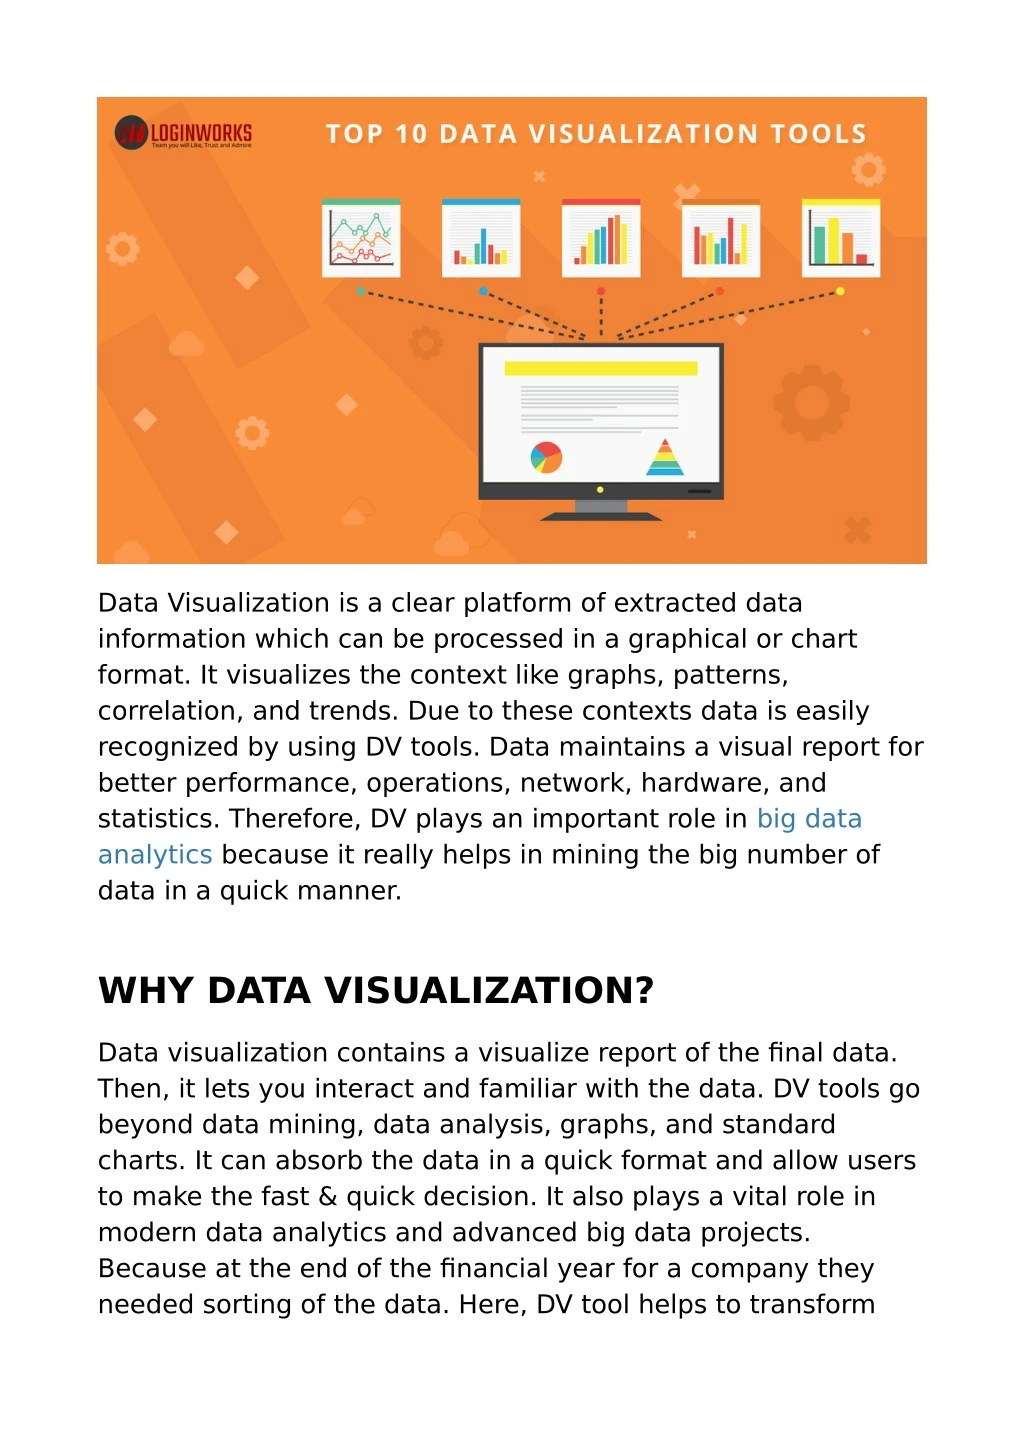 data visualization is a clear platform